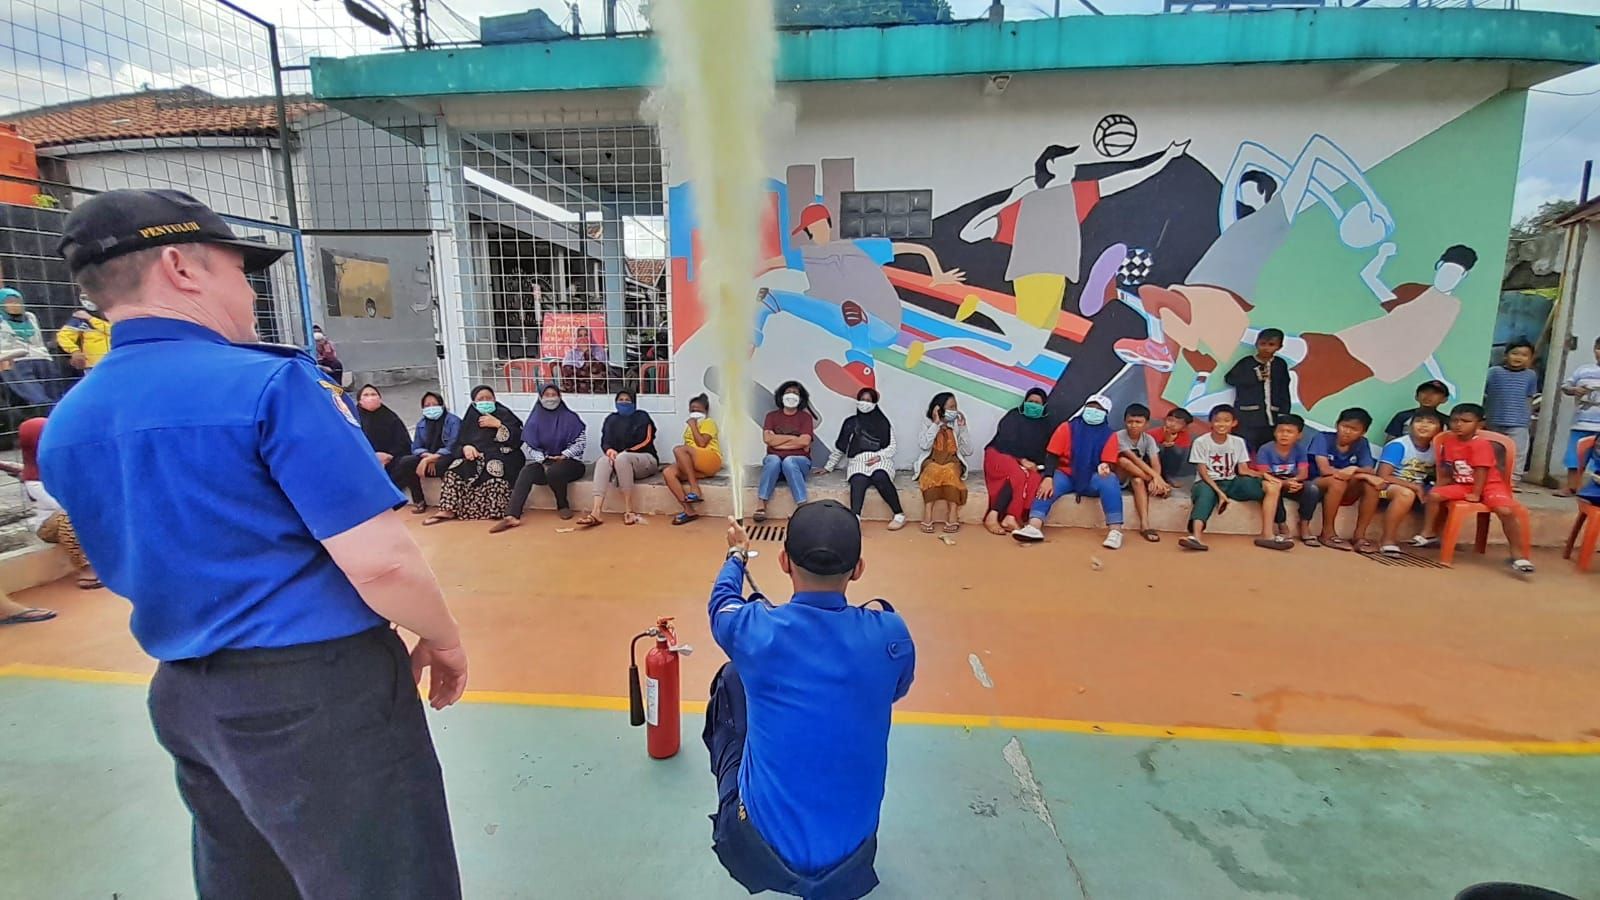 Petugas Pemadam Kebakaran Kota Cimahi menunjukan cara menghentikan semburan gas dari tabung elpiji pada sosialisasi dan pelatihan pemadam kebakaran yang diselenggarakan di  RW 05, Kelurahan Baros, Kecamatan Cimahi Tengah, Kota Cimahi. Rabu 23 Februari 2022.